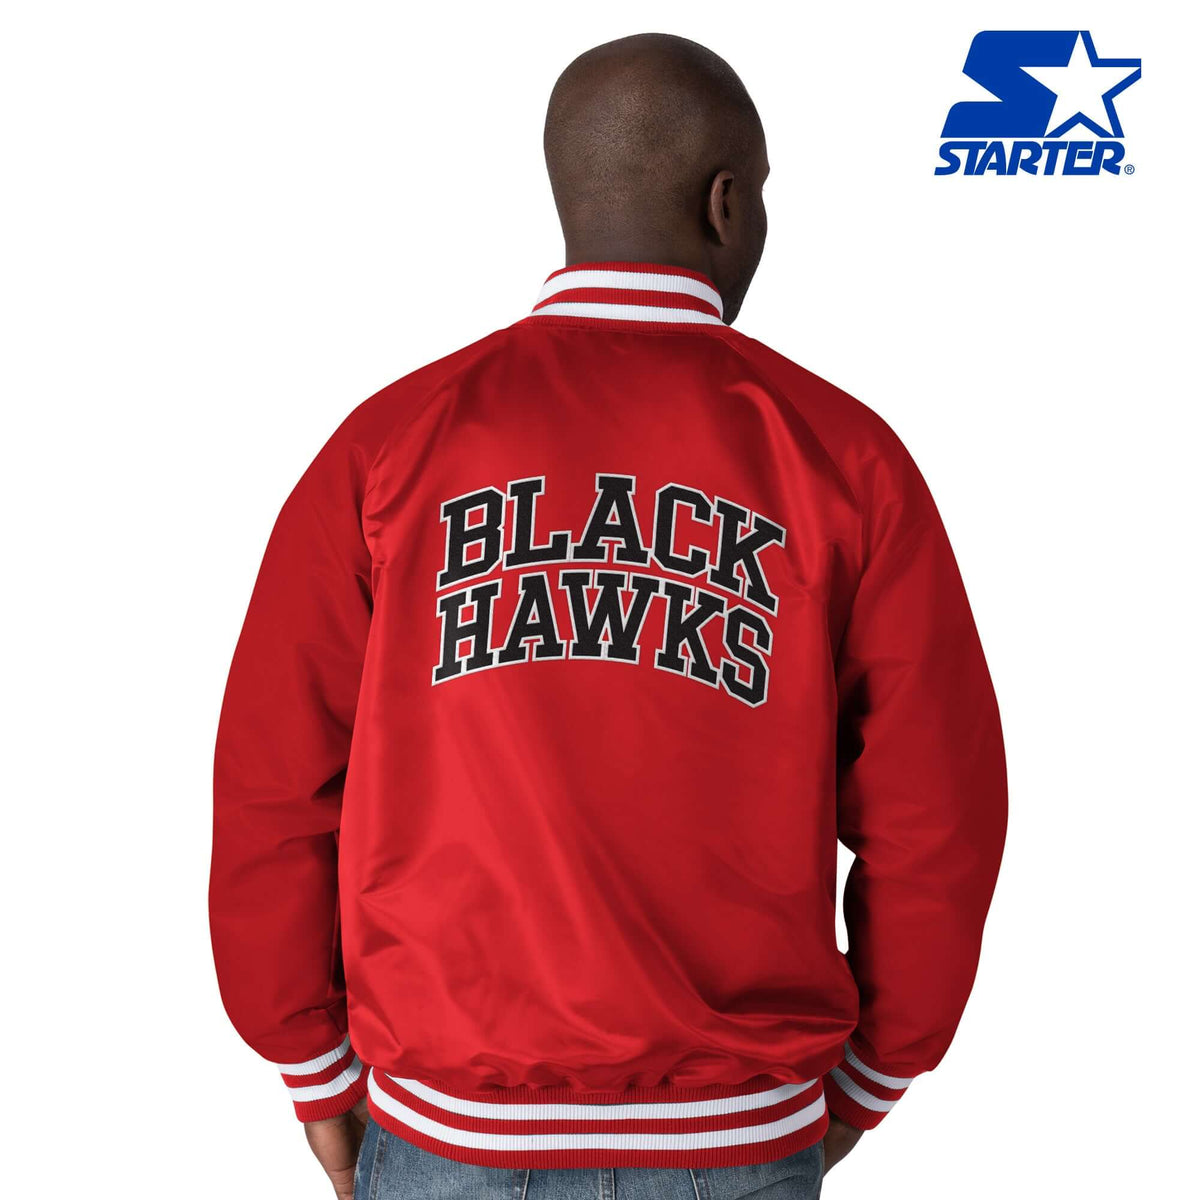 Starter Womens Chicago Blackhawks Windbreaker Jacket, Red, Large